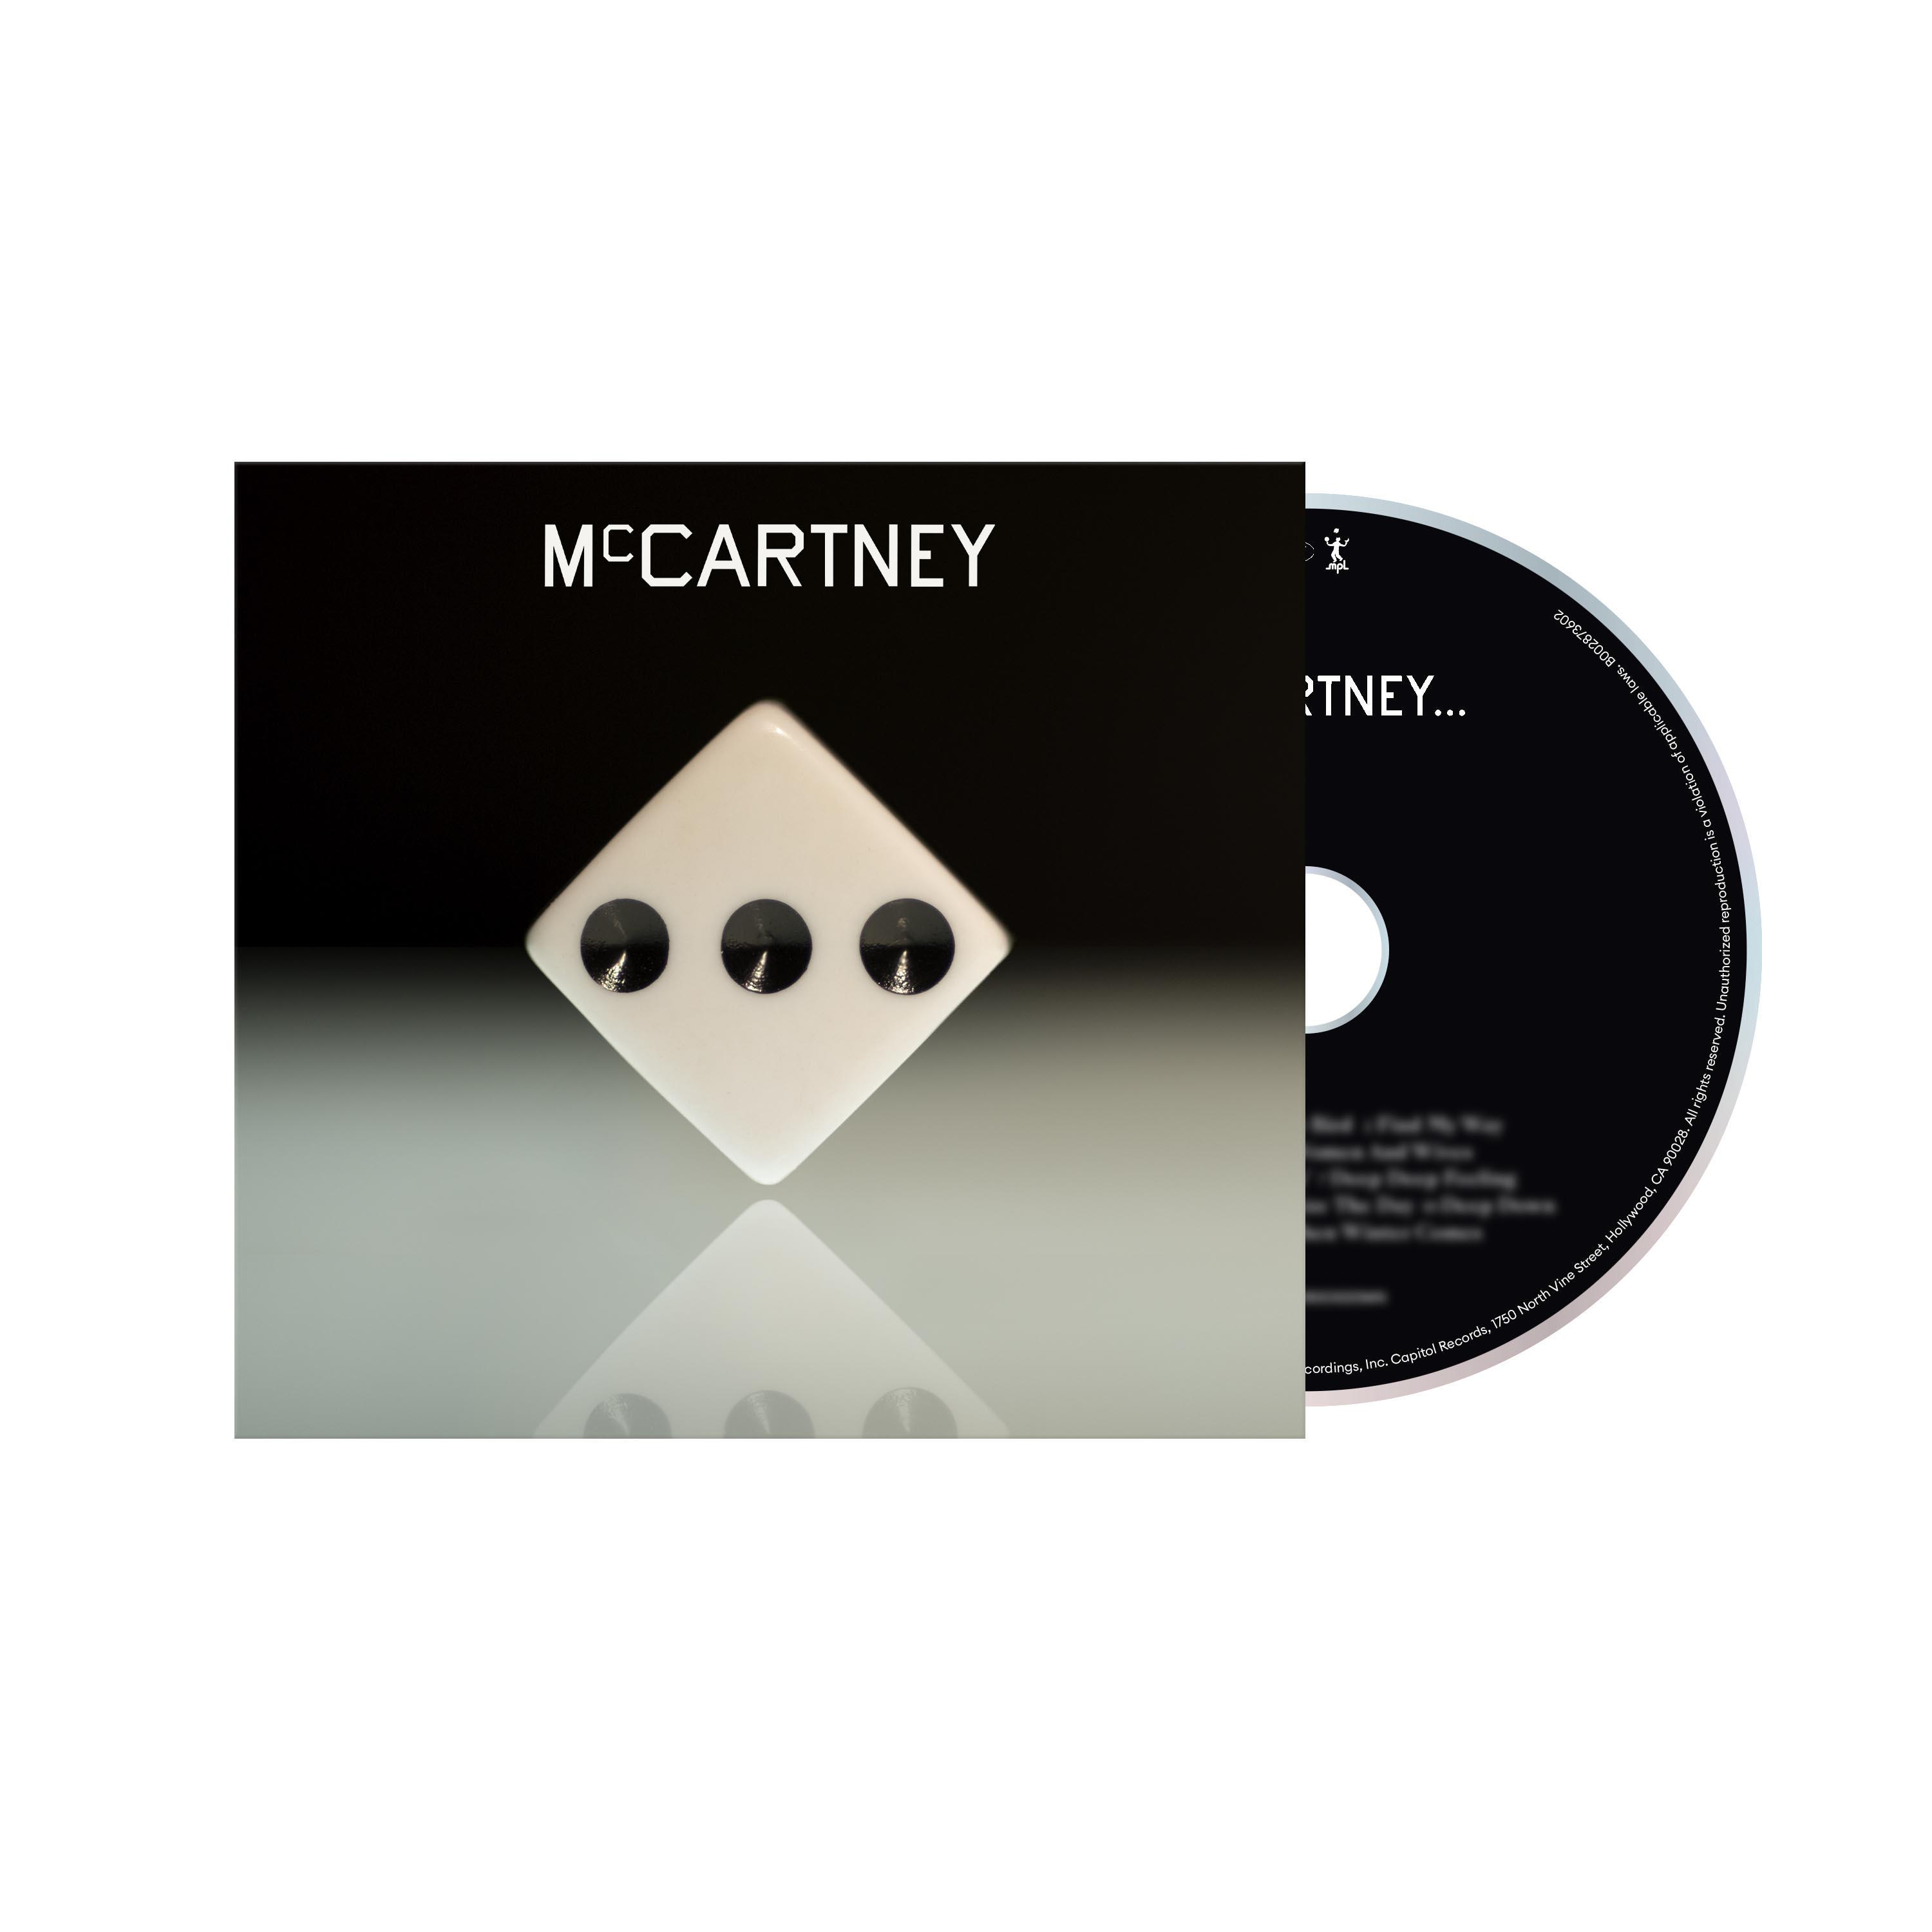 Paul McCartney - McCartney III - (CD)